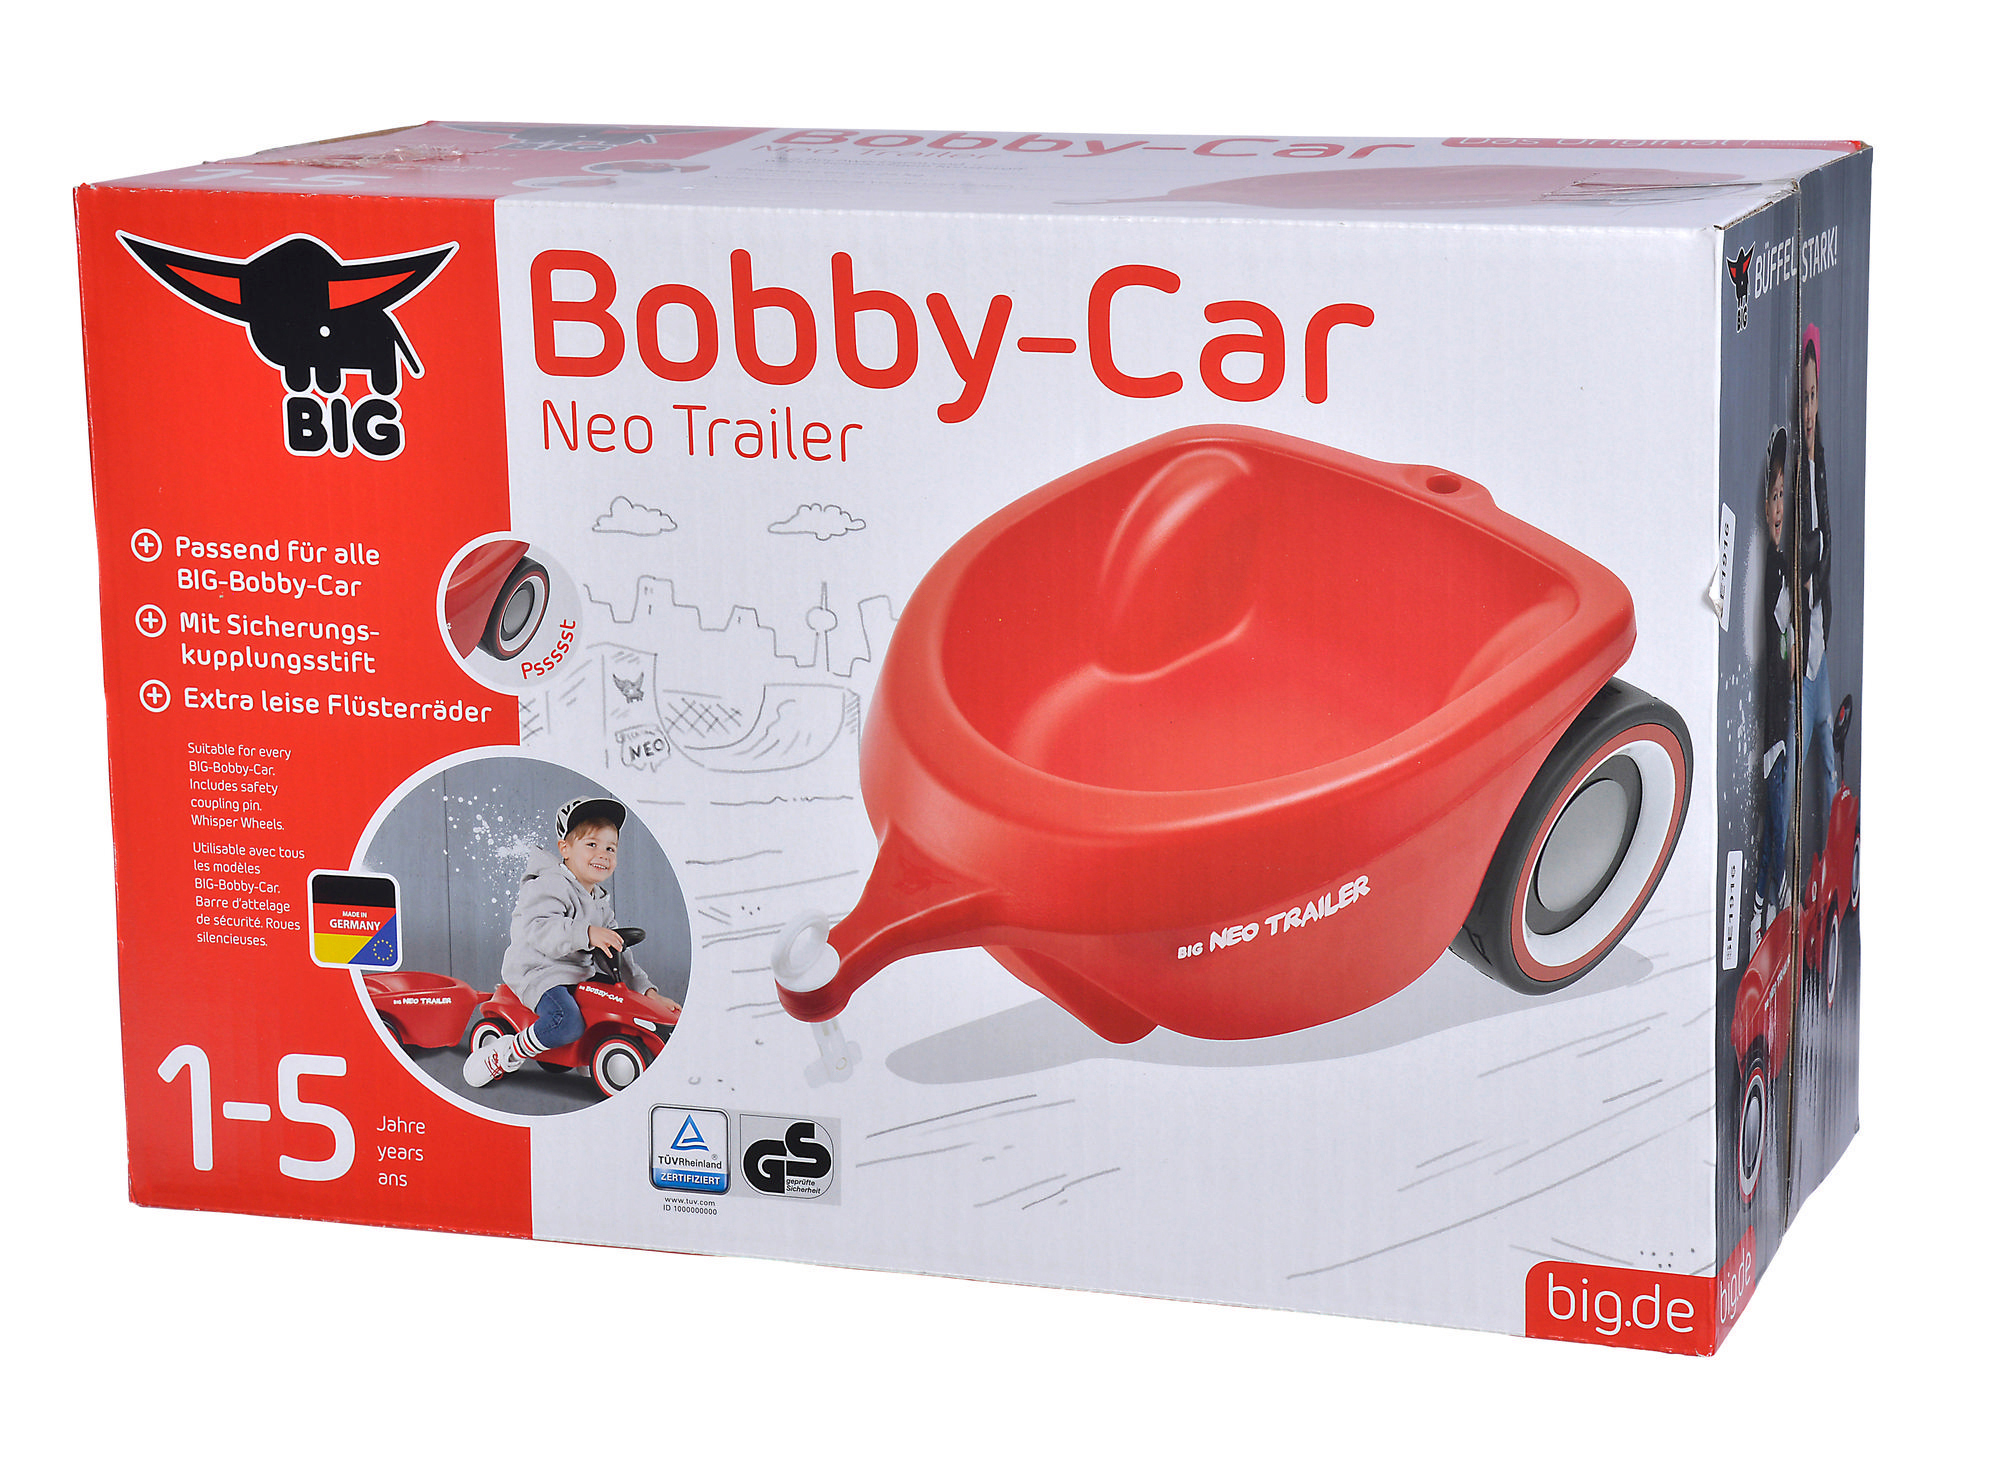 BIG Bobby Car Neo Trailer Bobby-Car Rot Zubehör